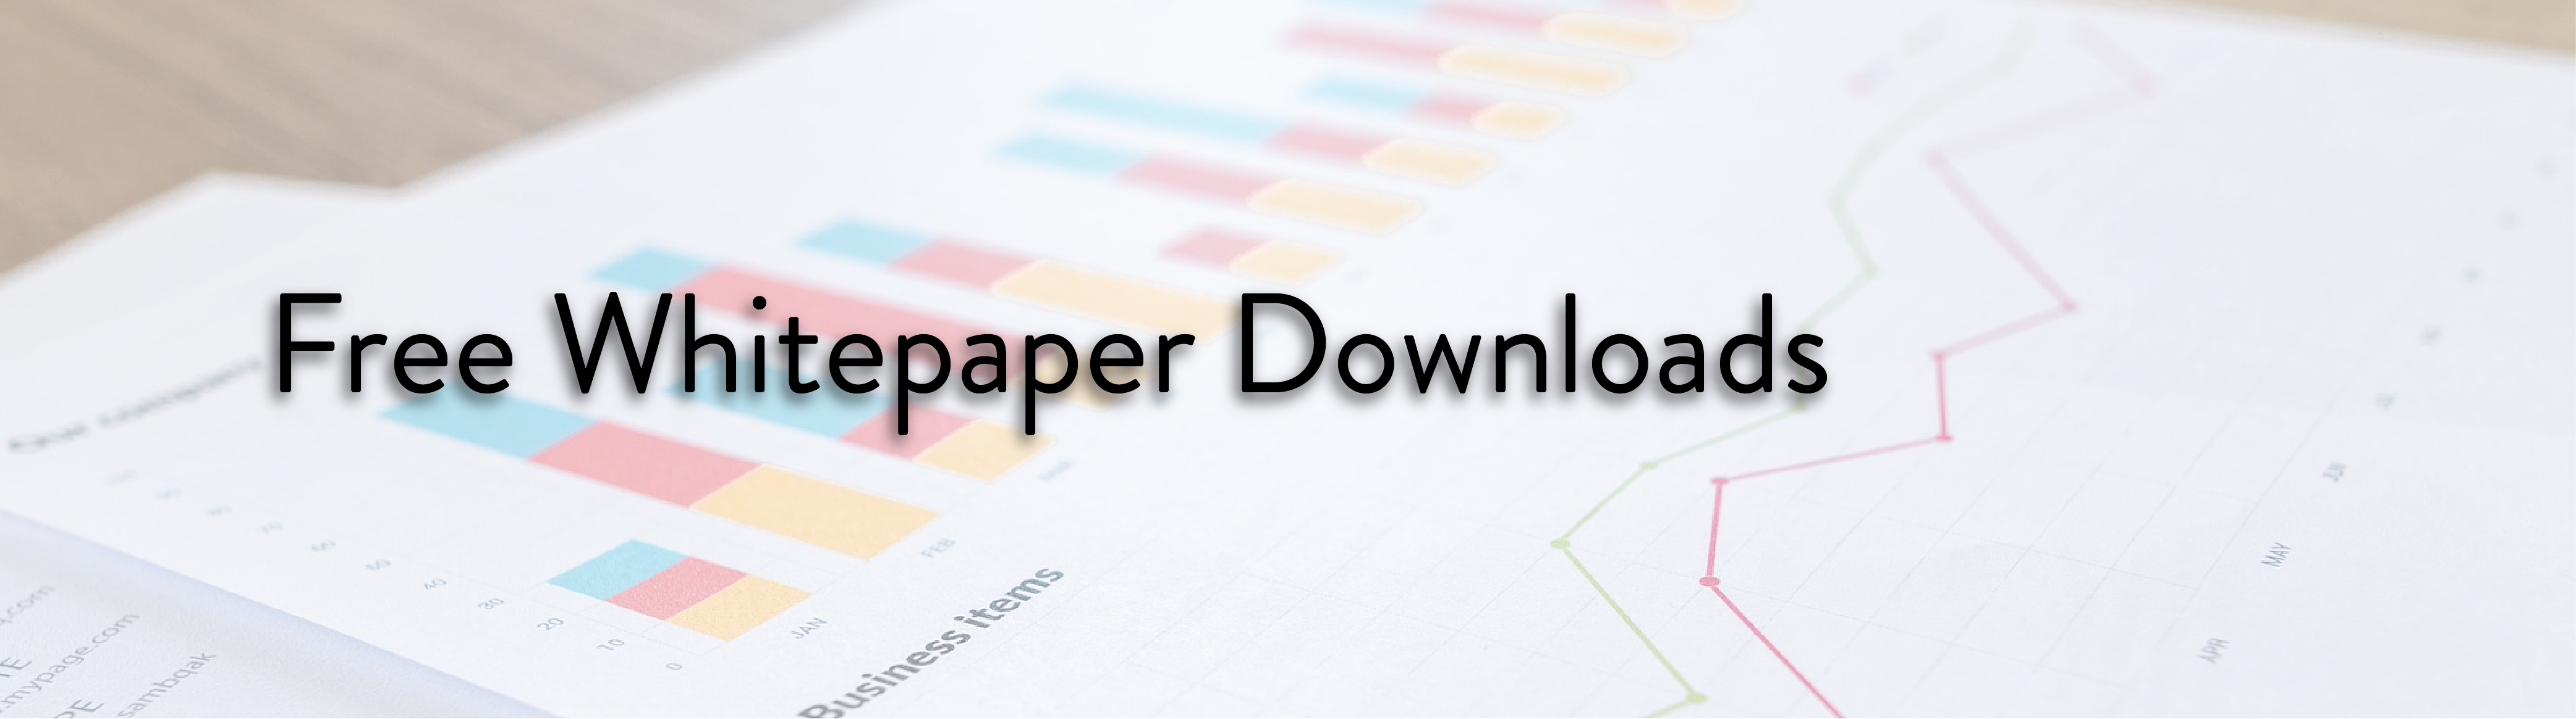 Free Whitepaper downloads